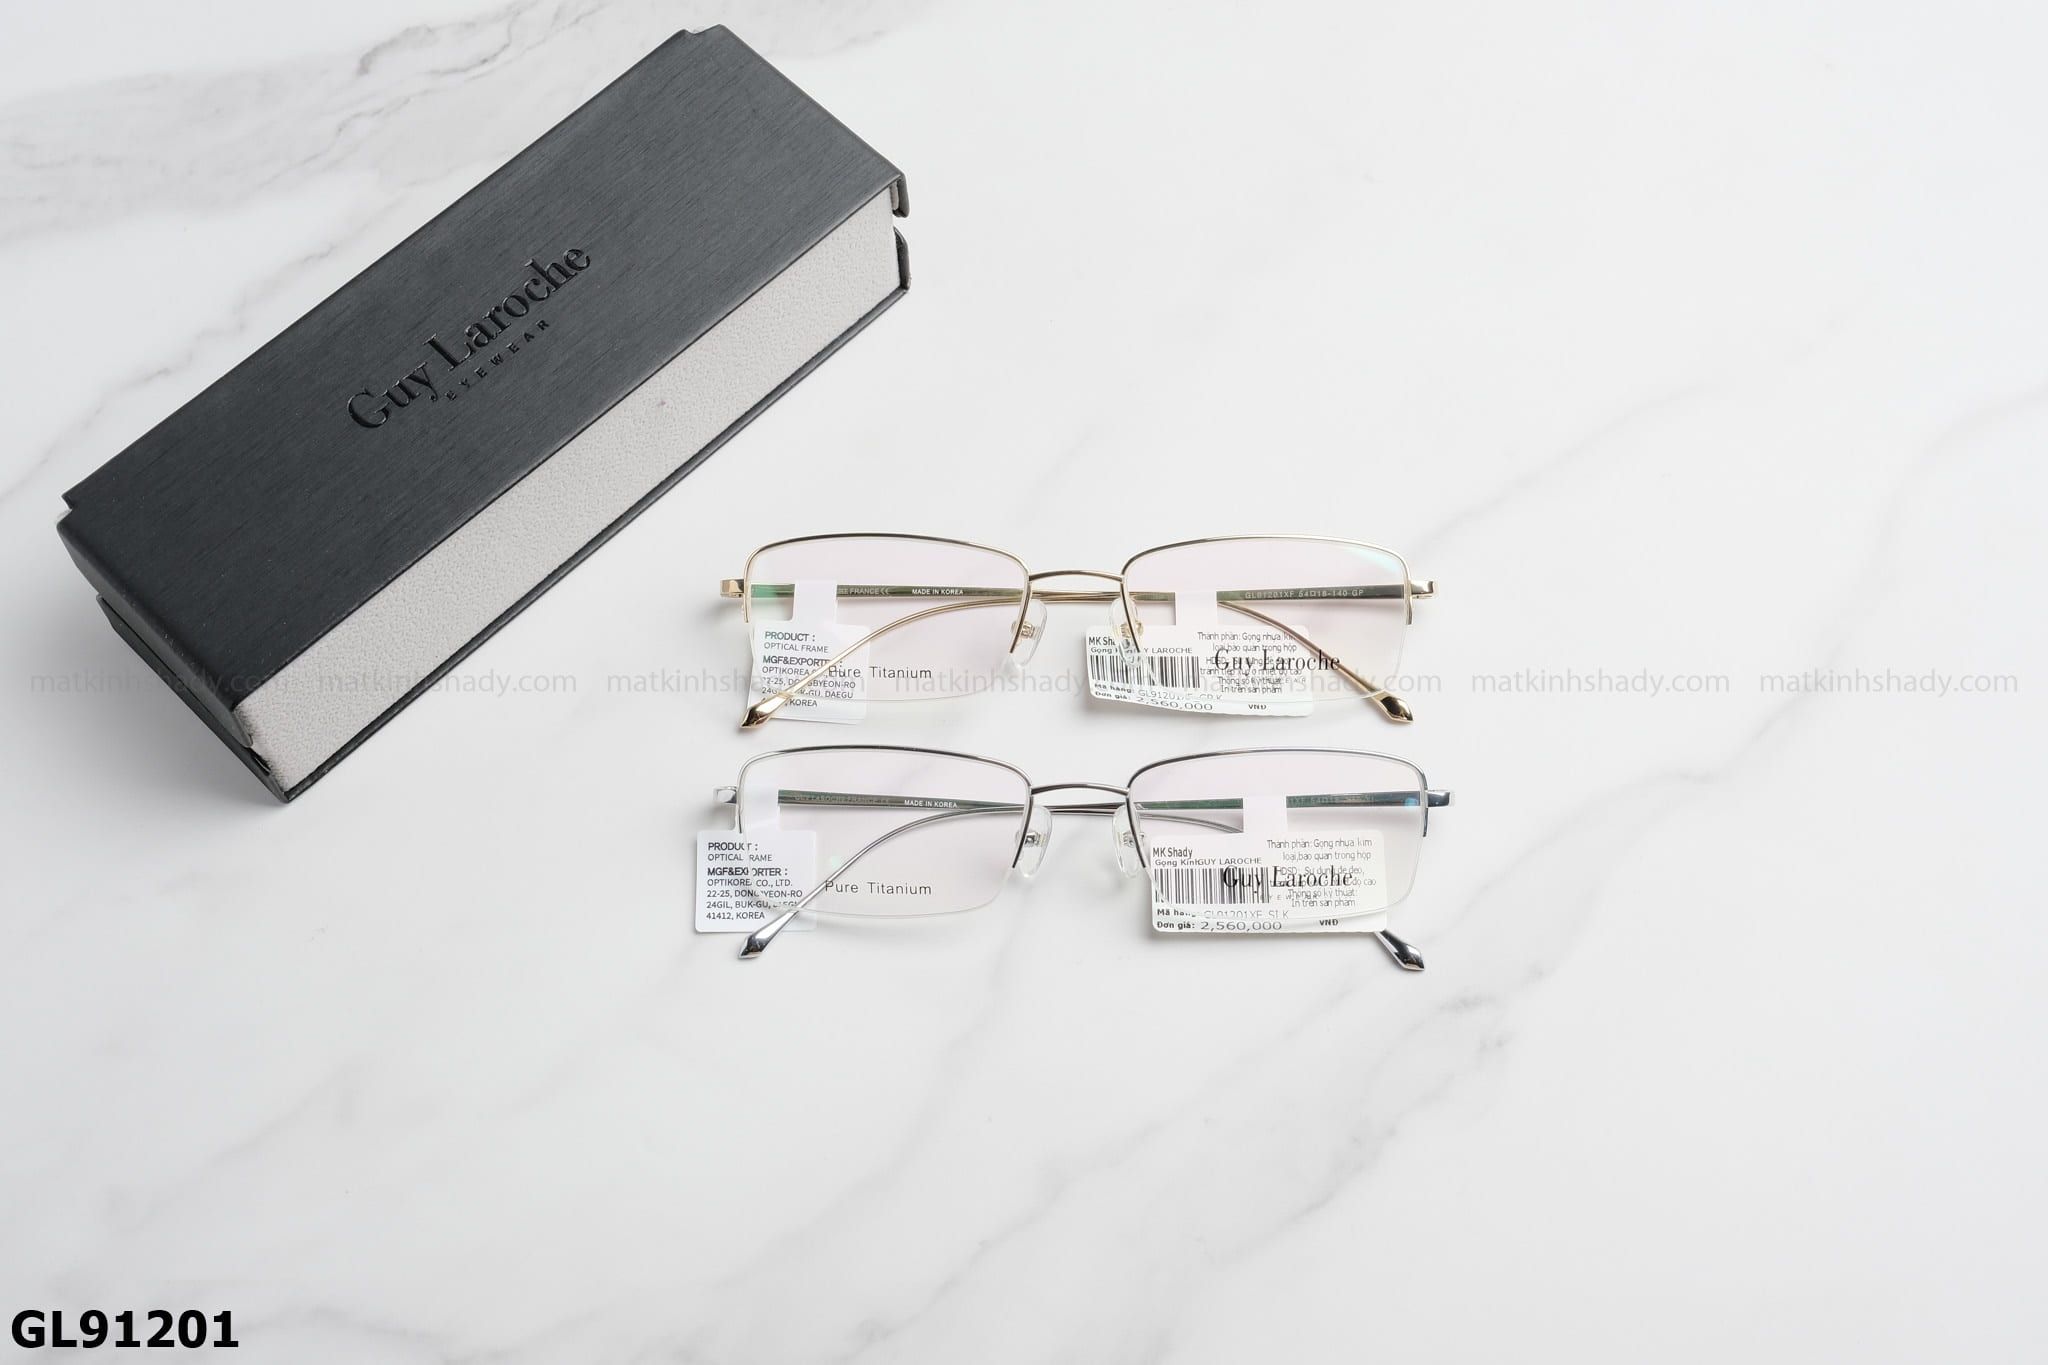  Guy Laroche Eyewear - Glasses - GL91201 